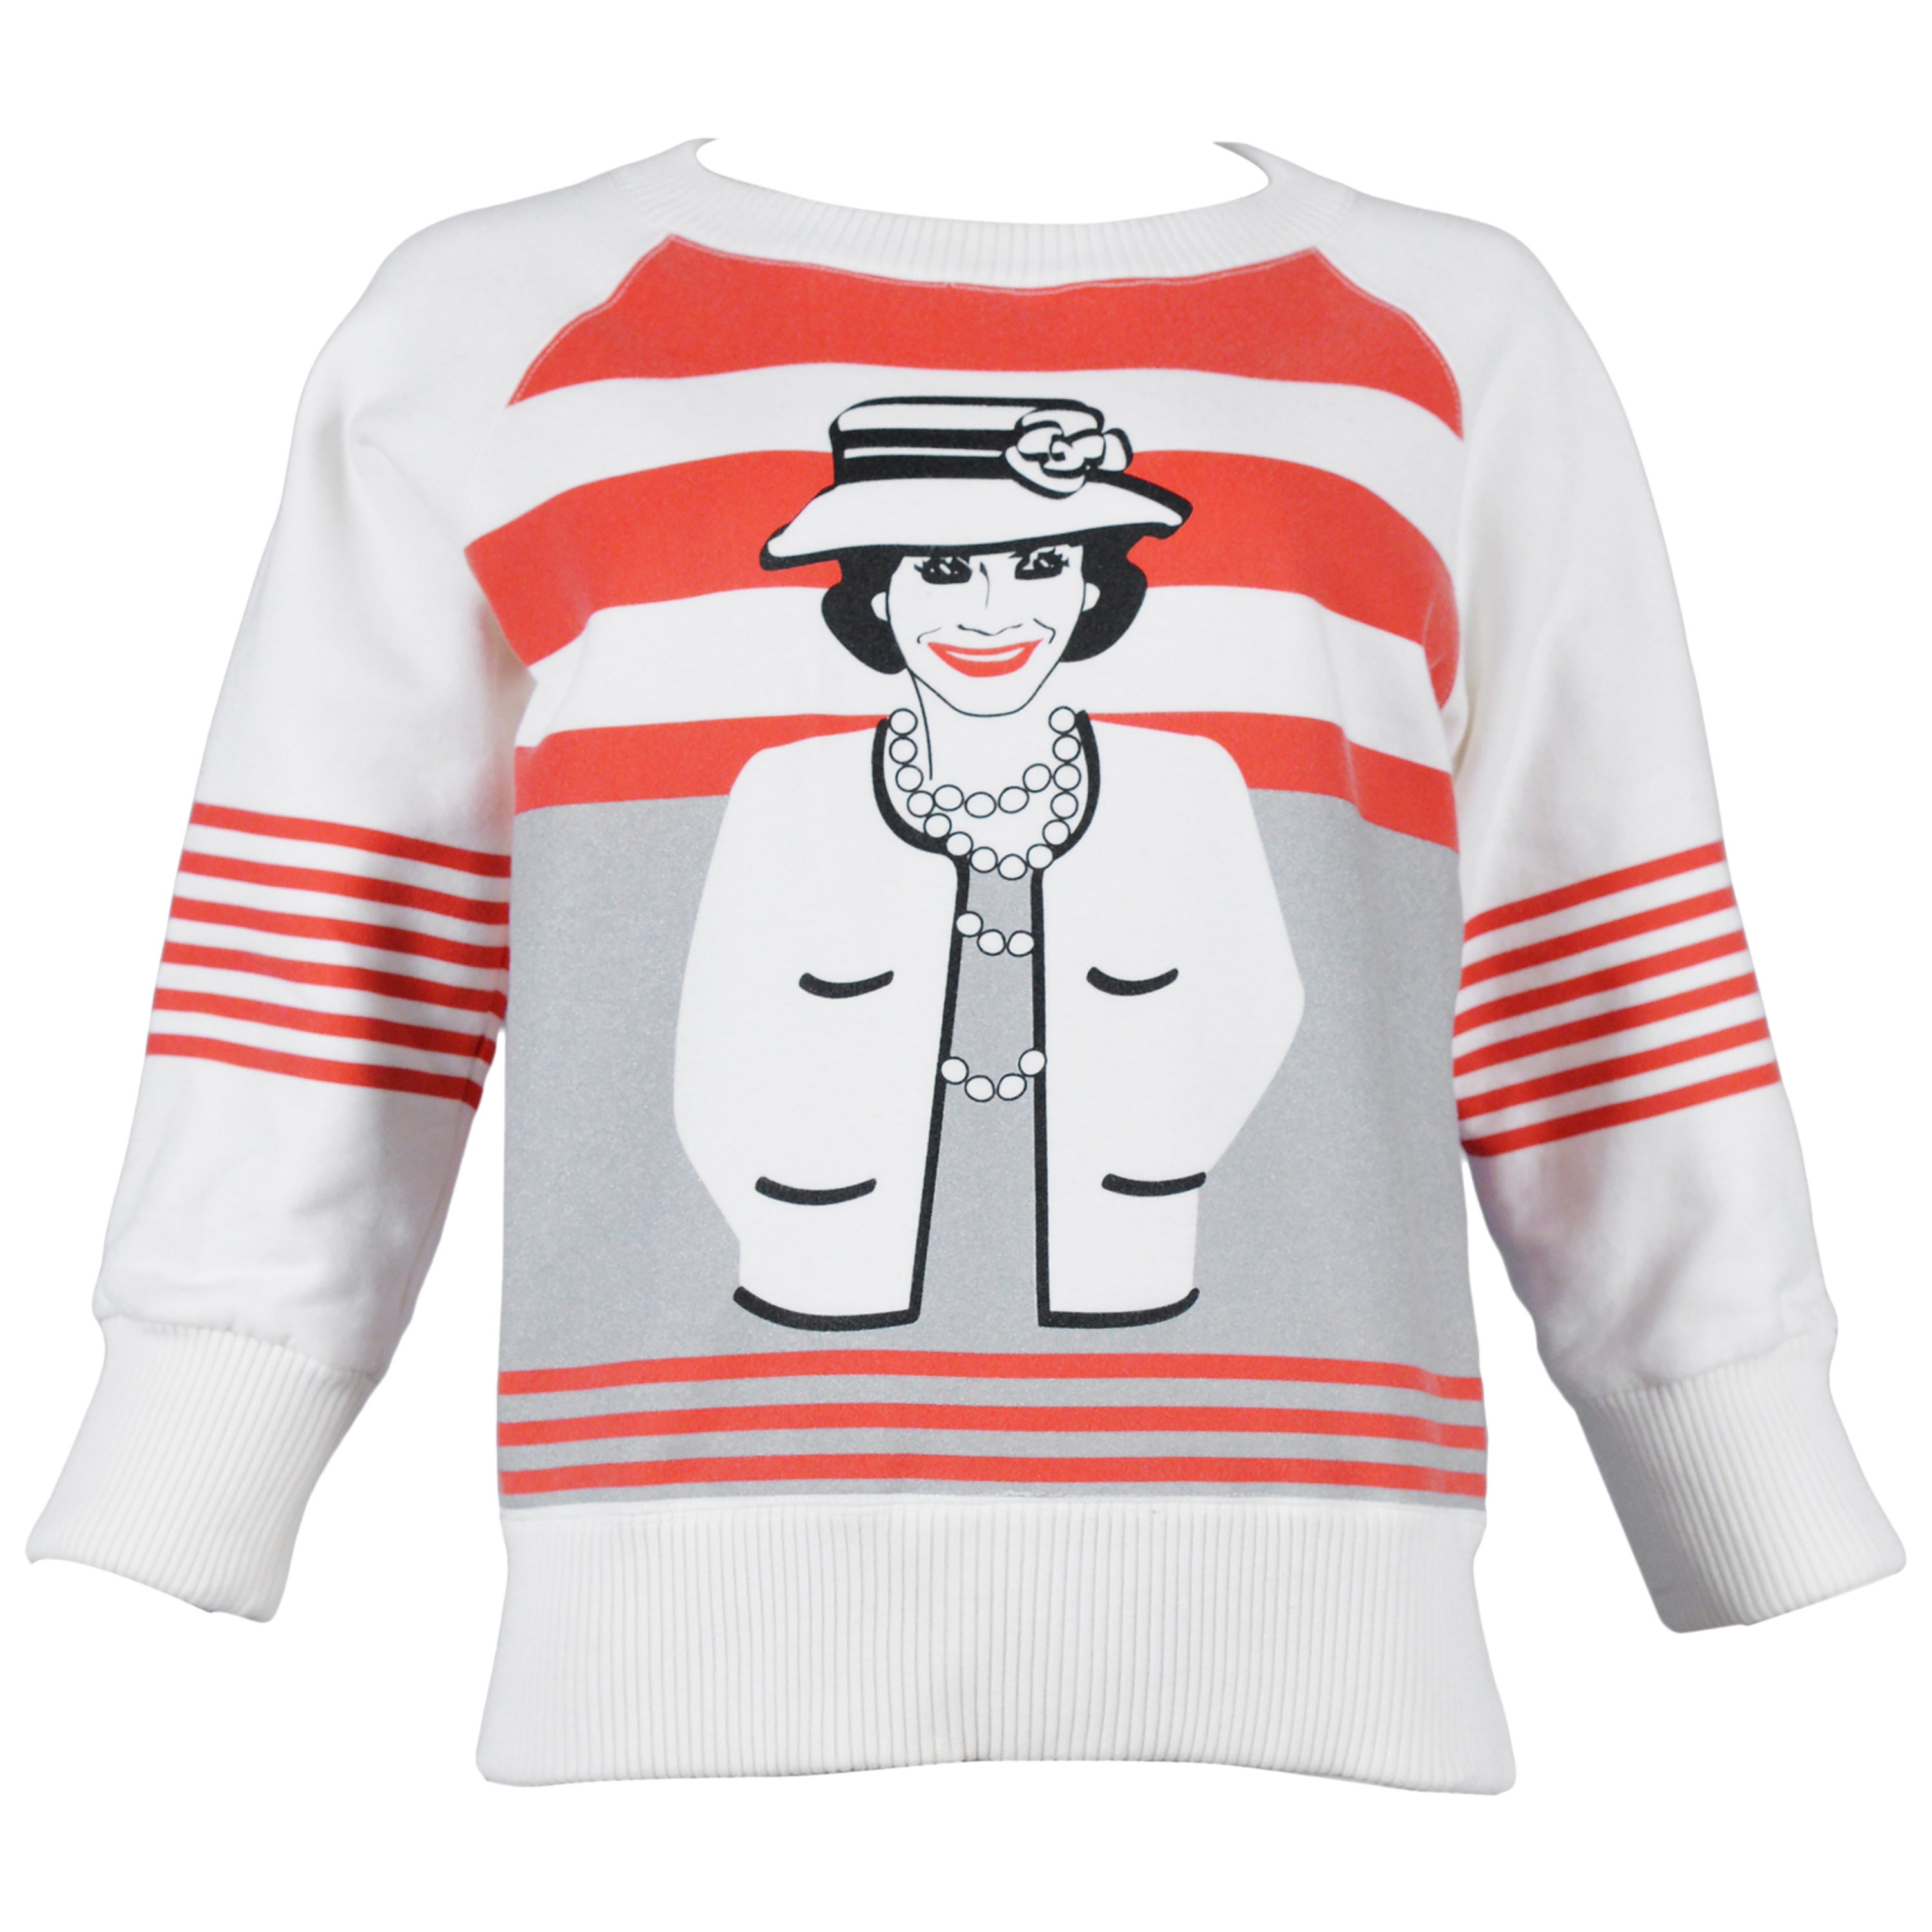 Coco Chanel Sweatshirt - 3 For Sale on 1stDibs